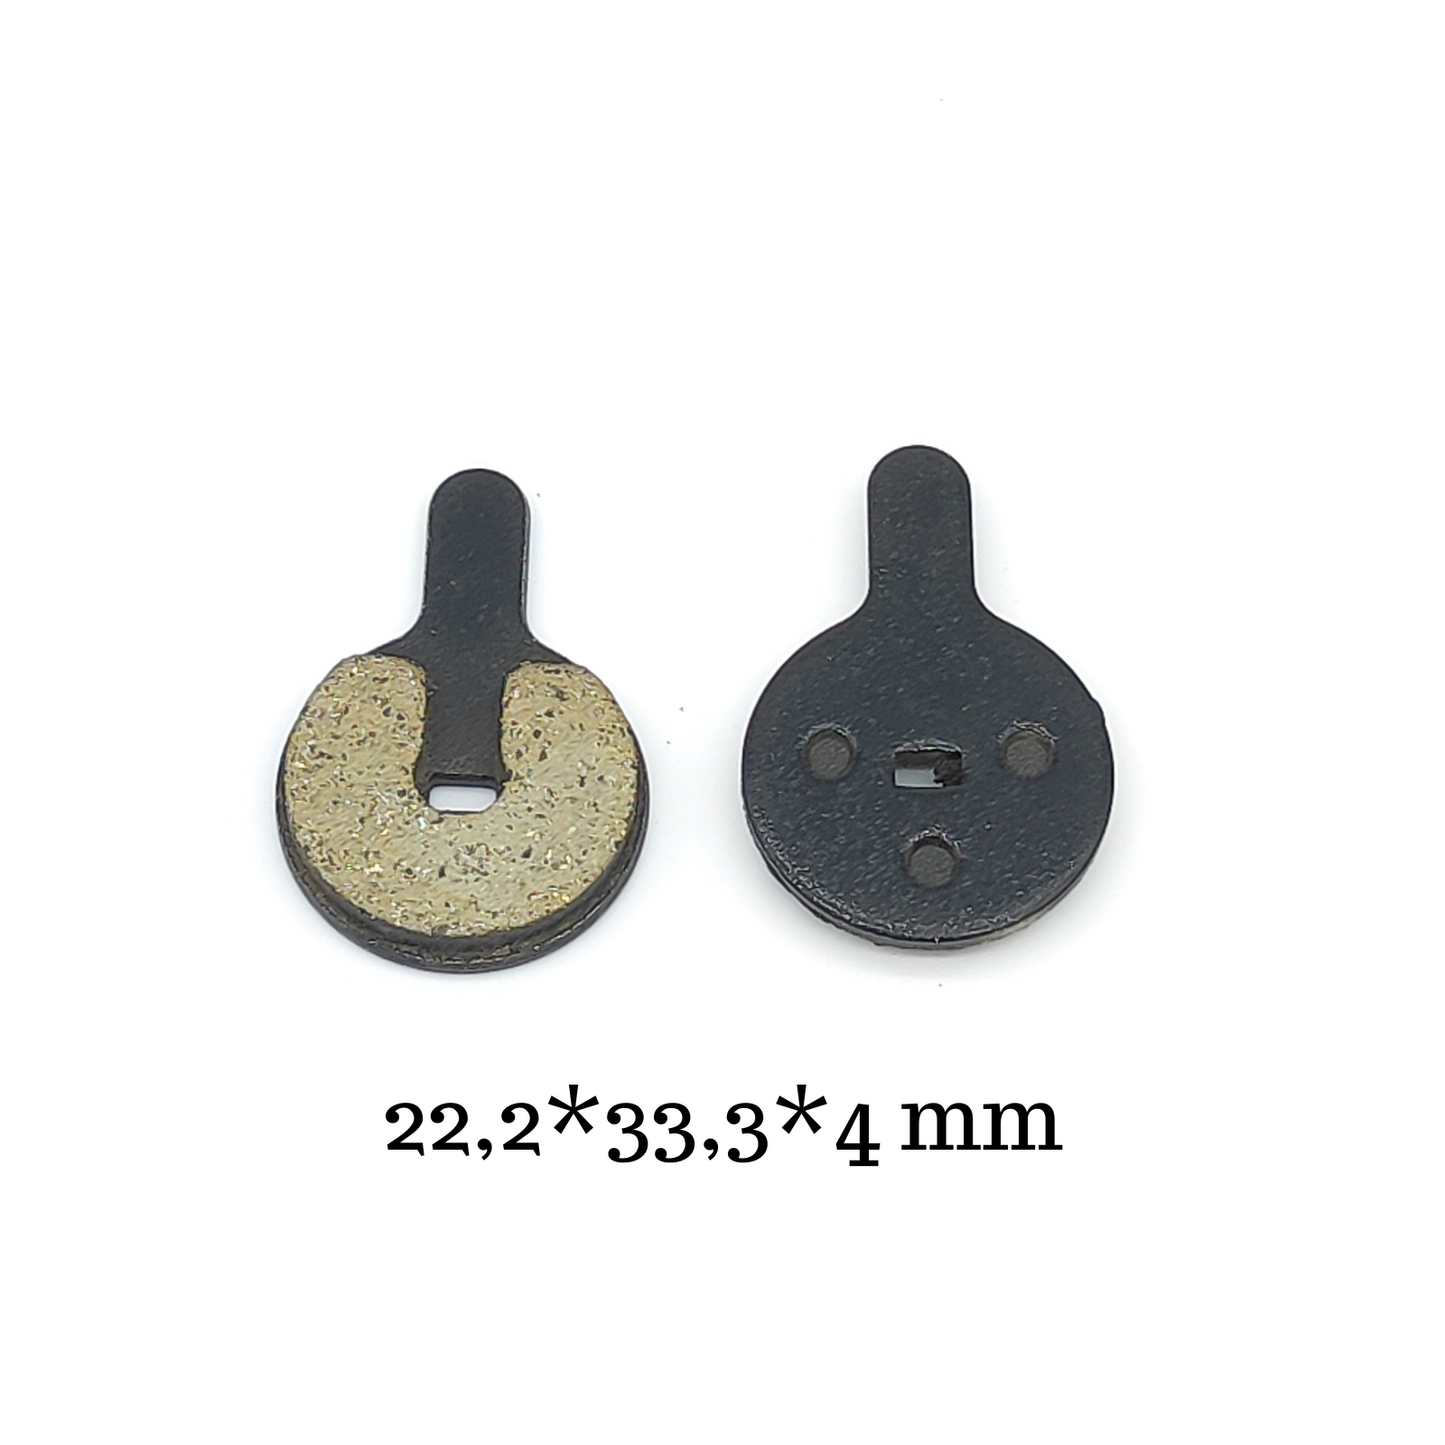 Bromsbelägg Semimetall 22,2*33,3*4 mm E-Scootercykel